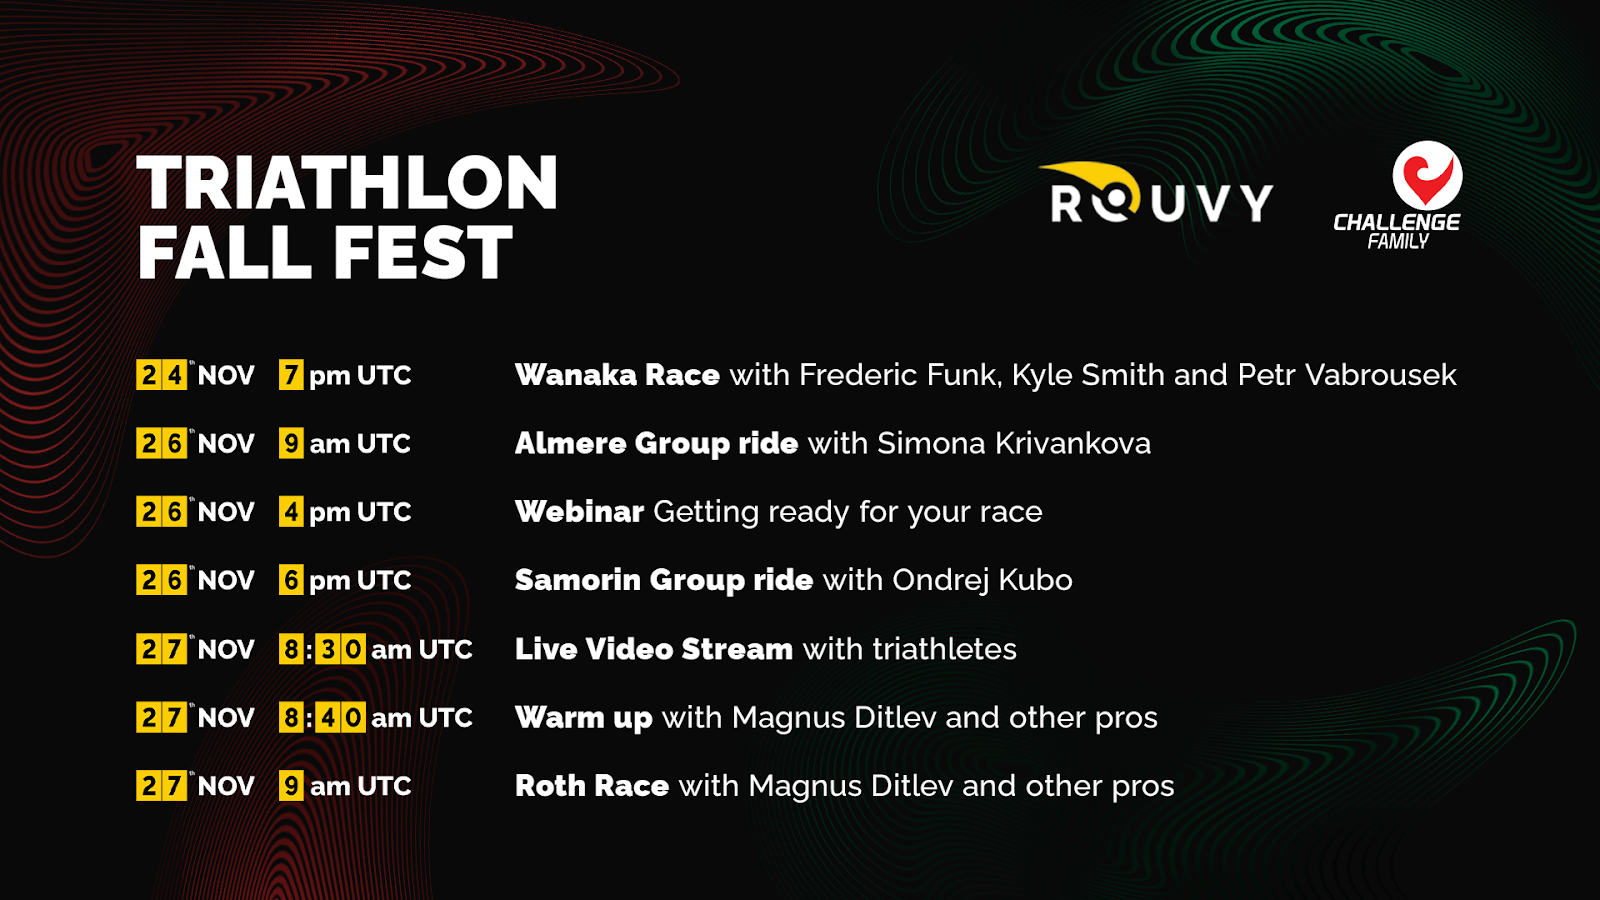 ROUVY triathlon festival schedule